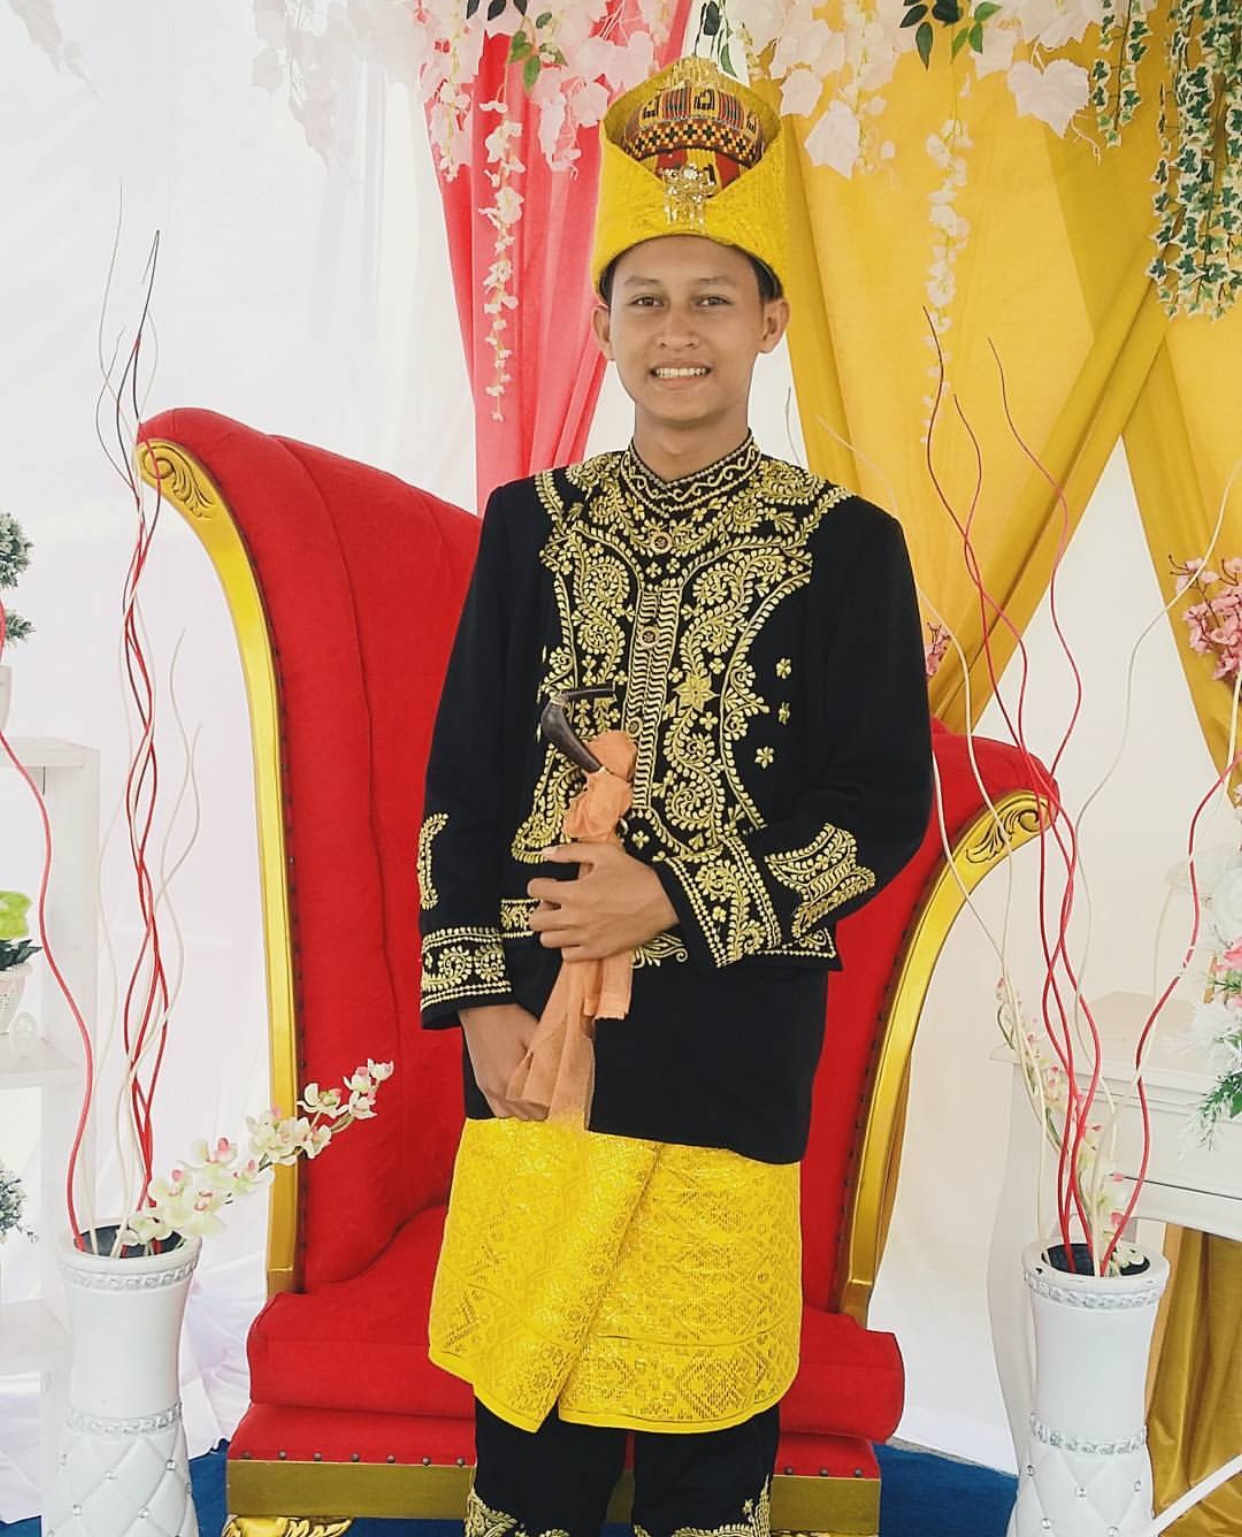 Teuku Rassya juga Hadiri Upacara di Istana Negara, Fotonya Pakai Baju